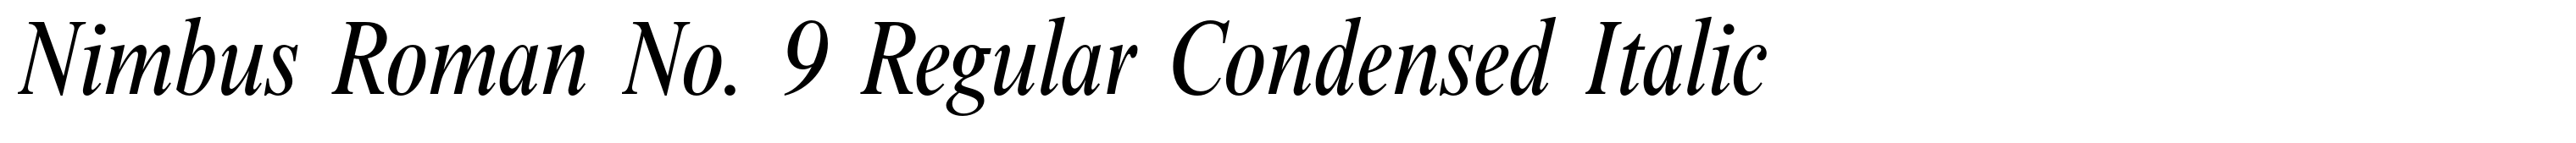 Nimbus Roman No. 9 Regular Condensed Italic